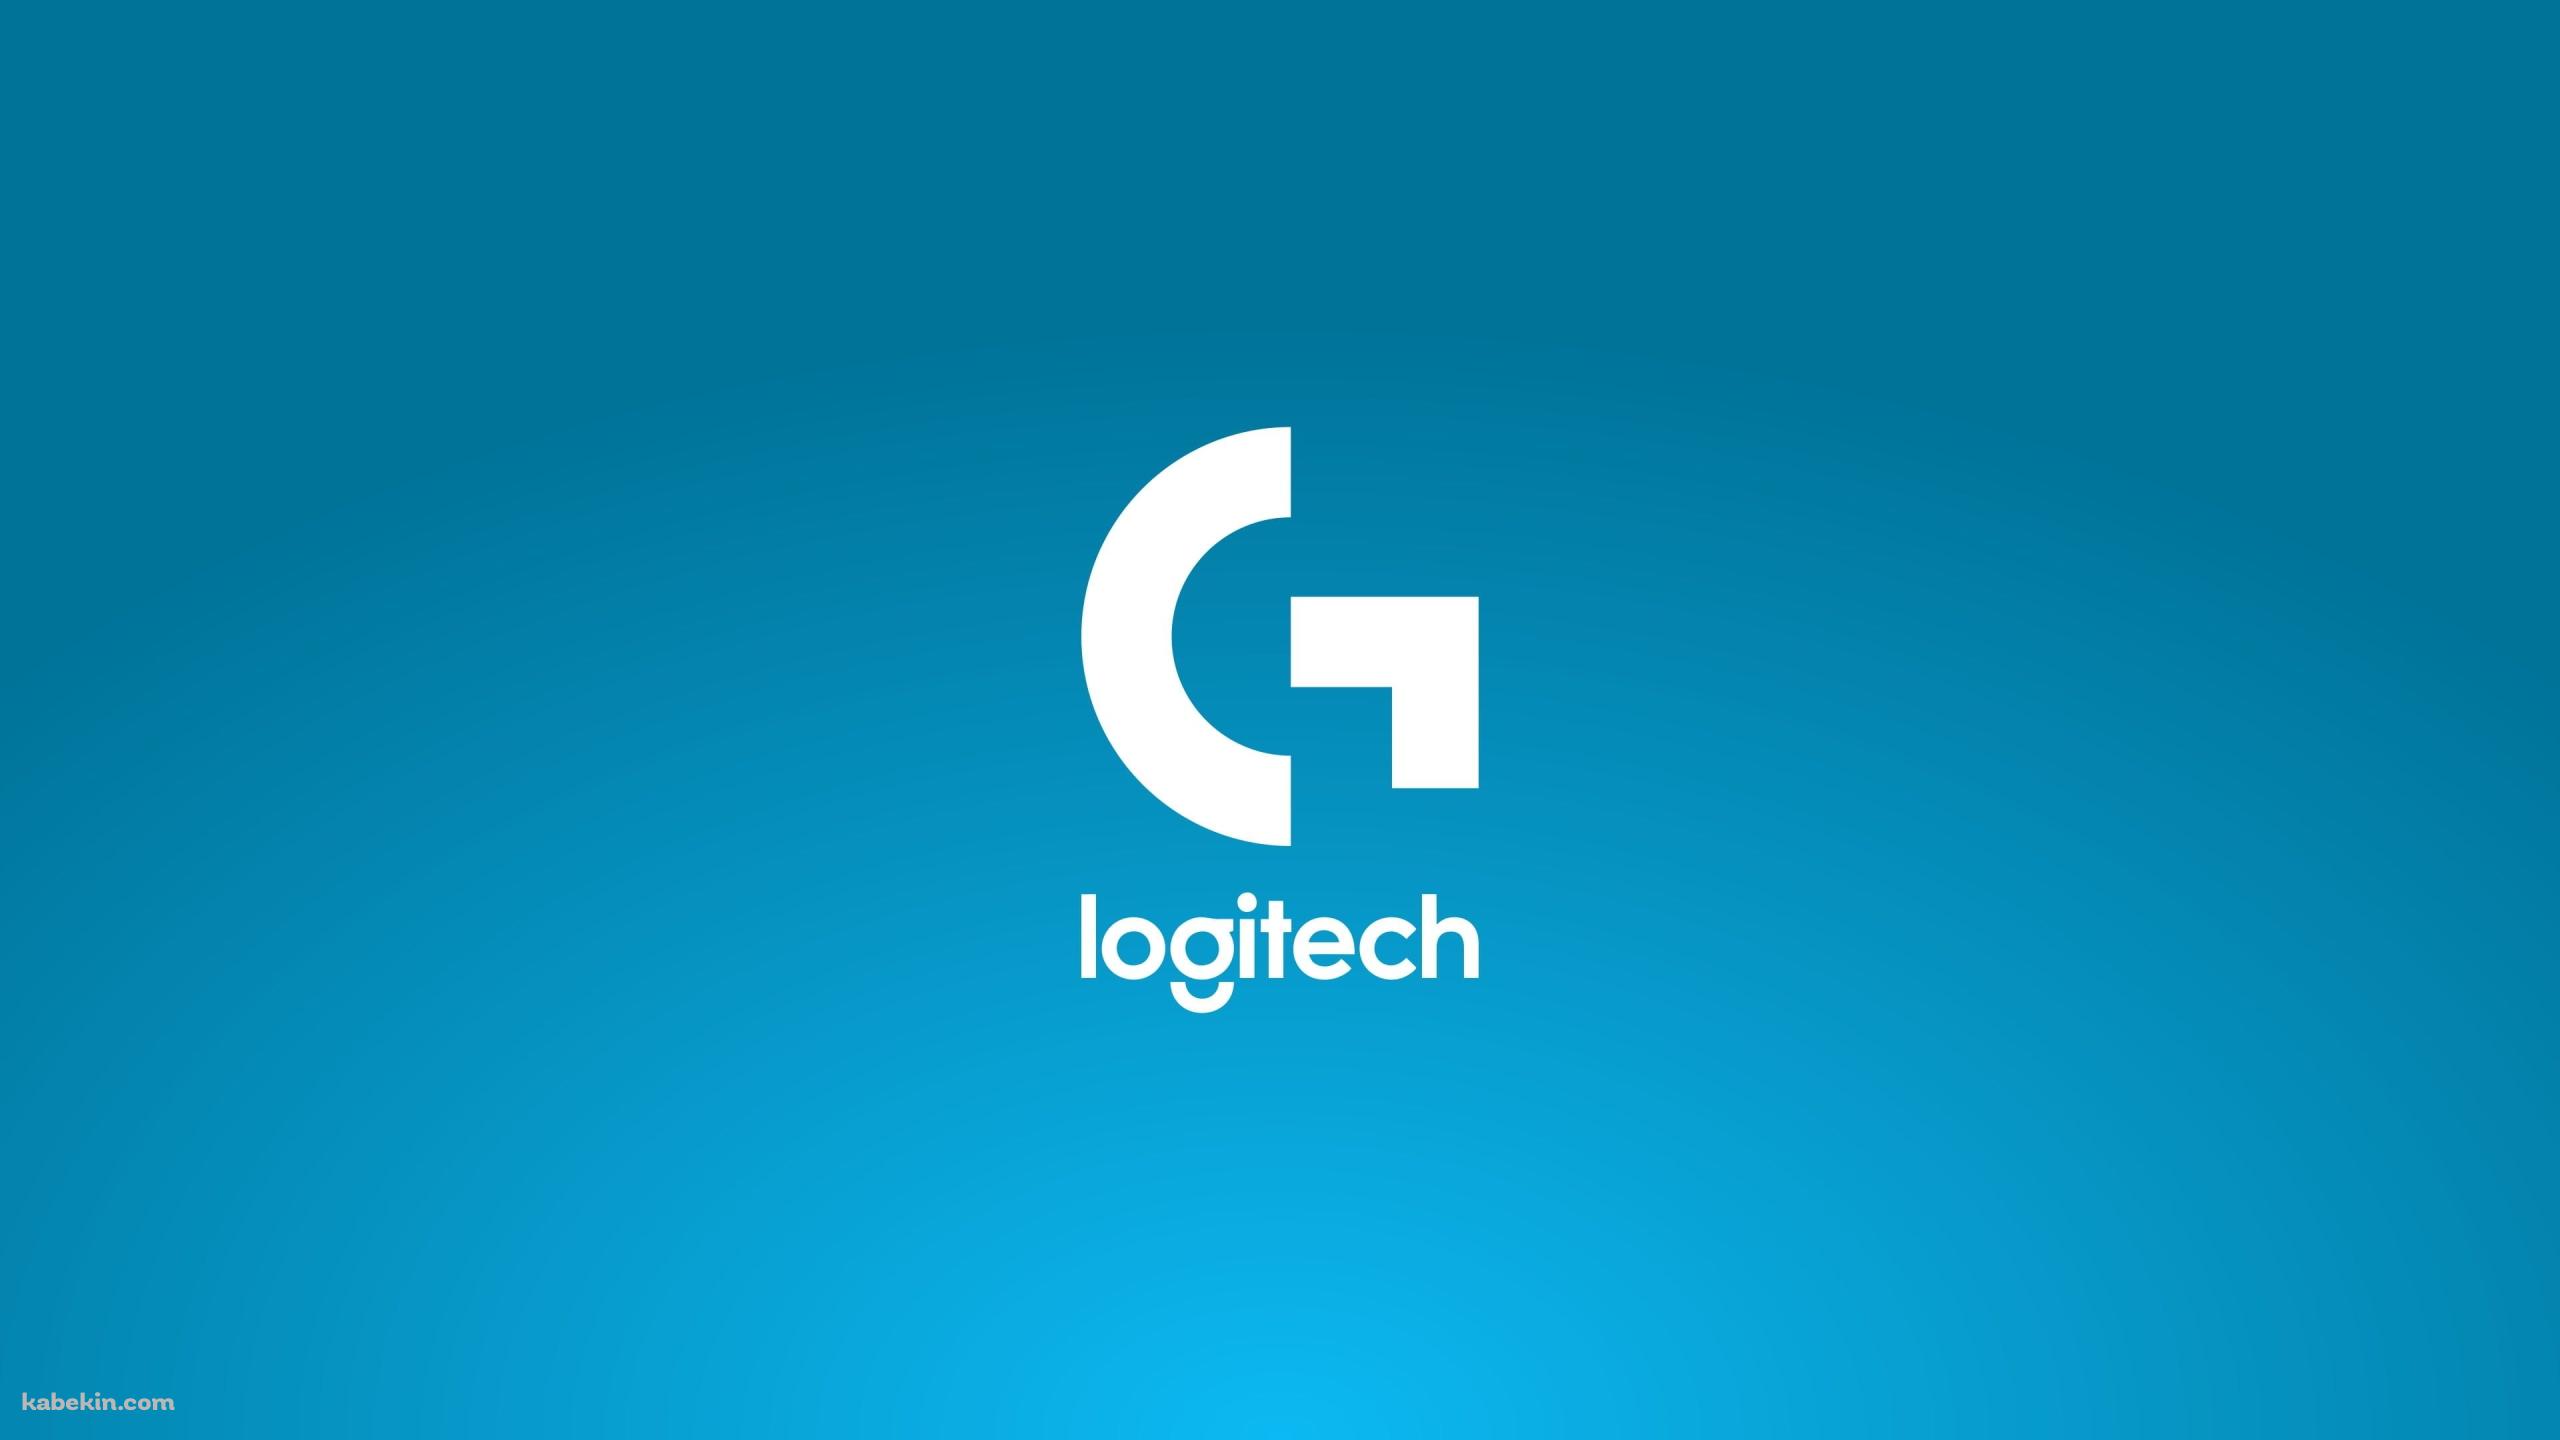 Logiteck logo / ロジテック ロゴの壁紙(2560px x 1440px) 高画質 PC・デスクトップ用